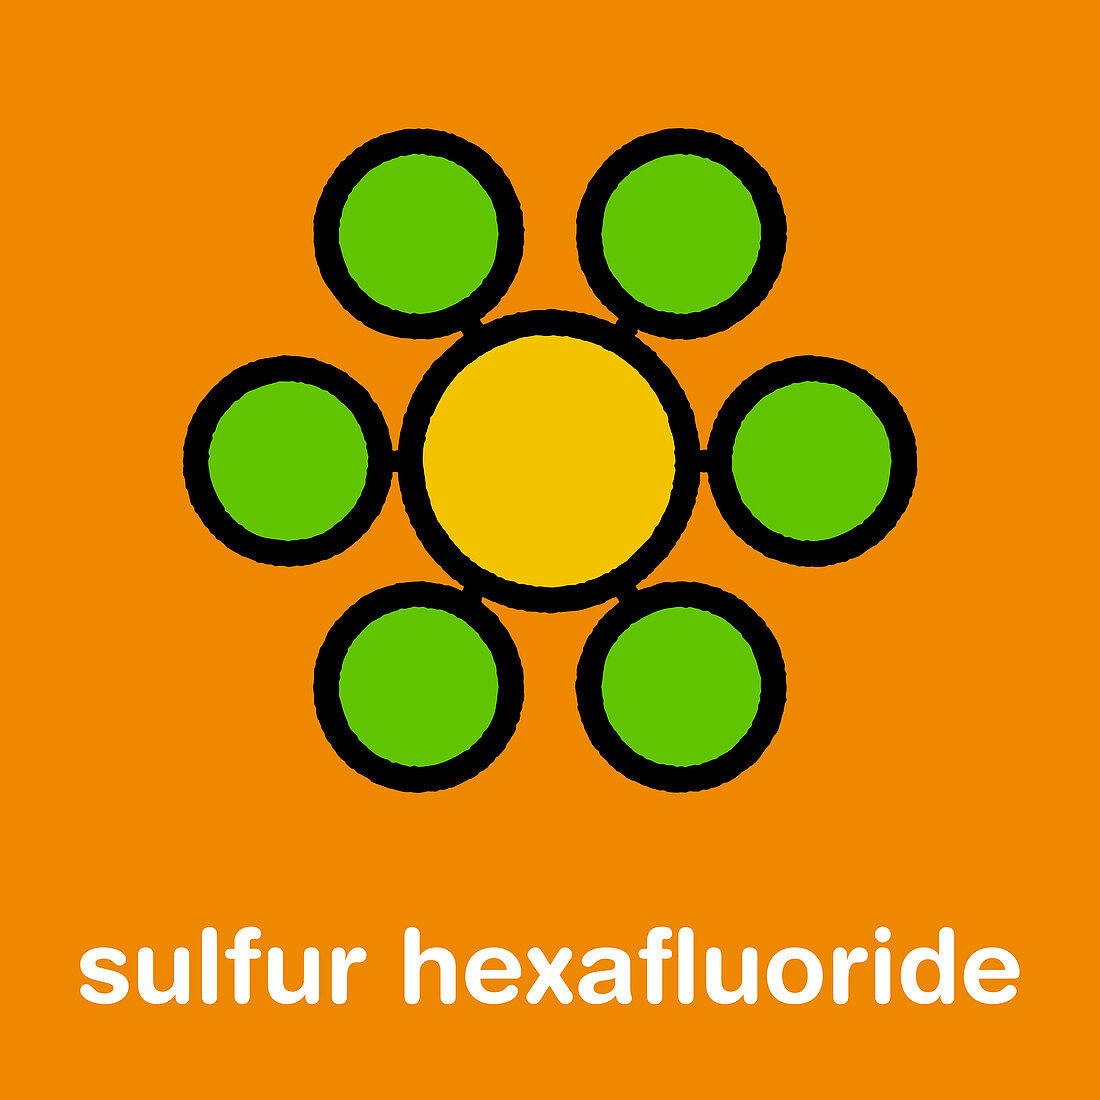 Sulfur hexafluoride gas insulator molecule, illustration